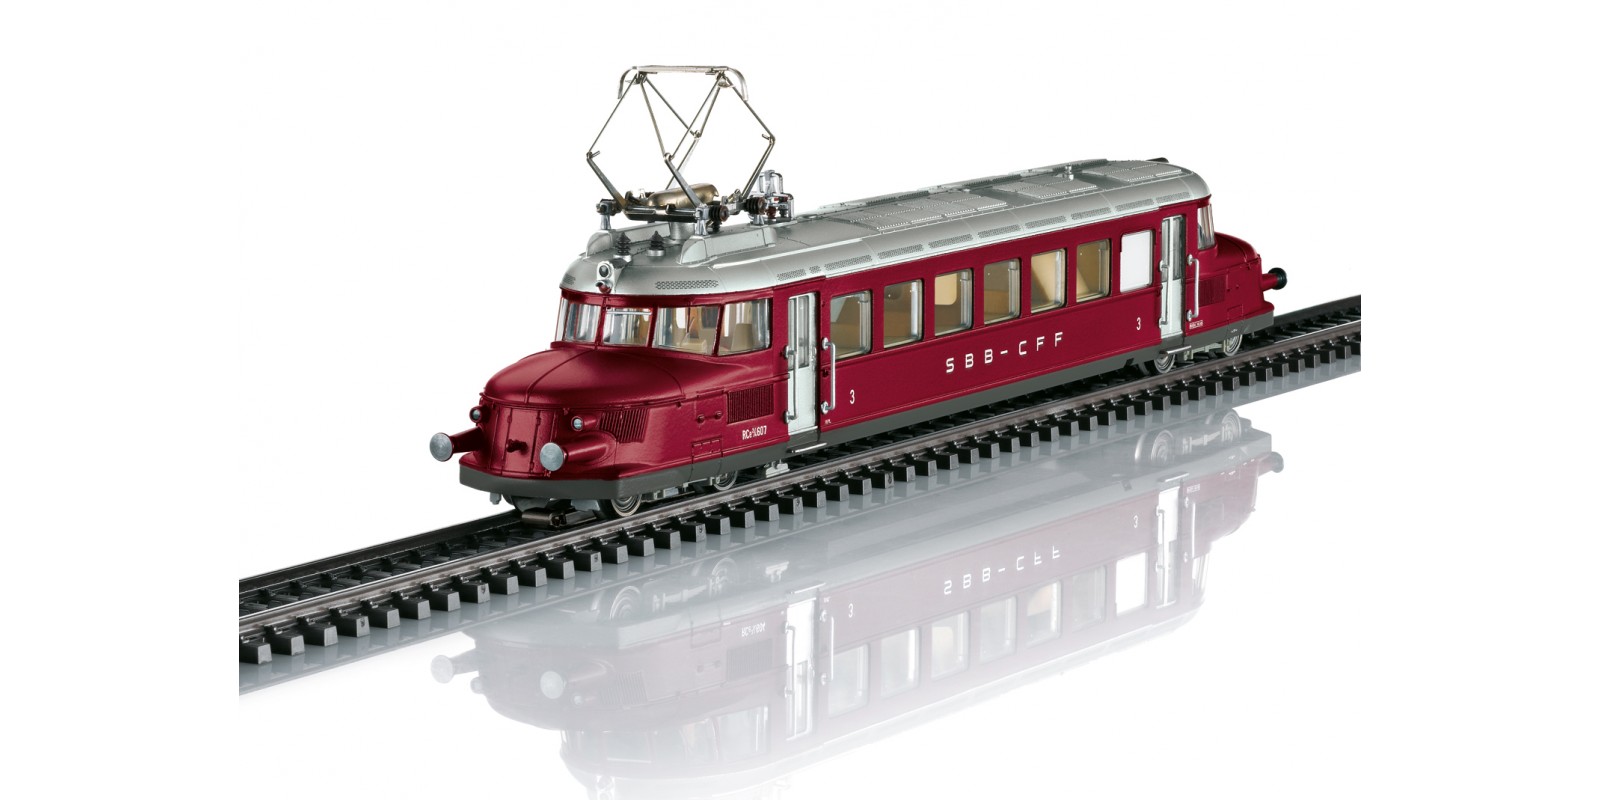 38860 Class RCe 2/4 Fast Powered Rail Car